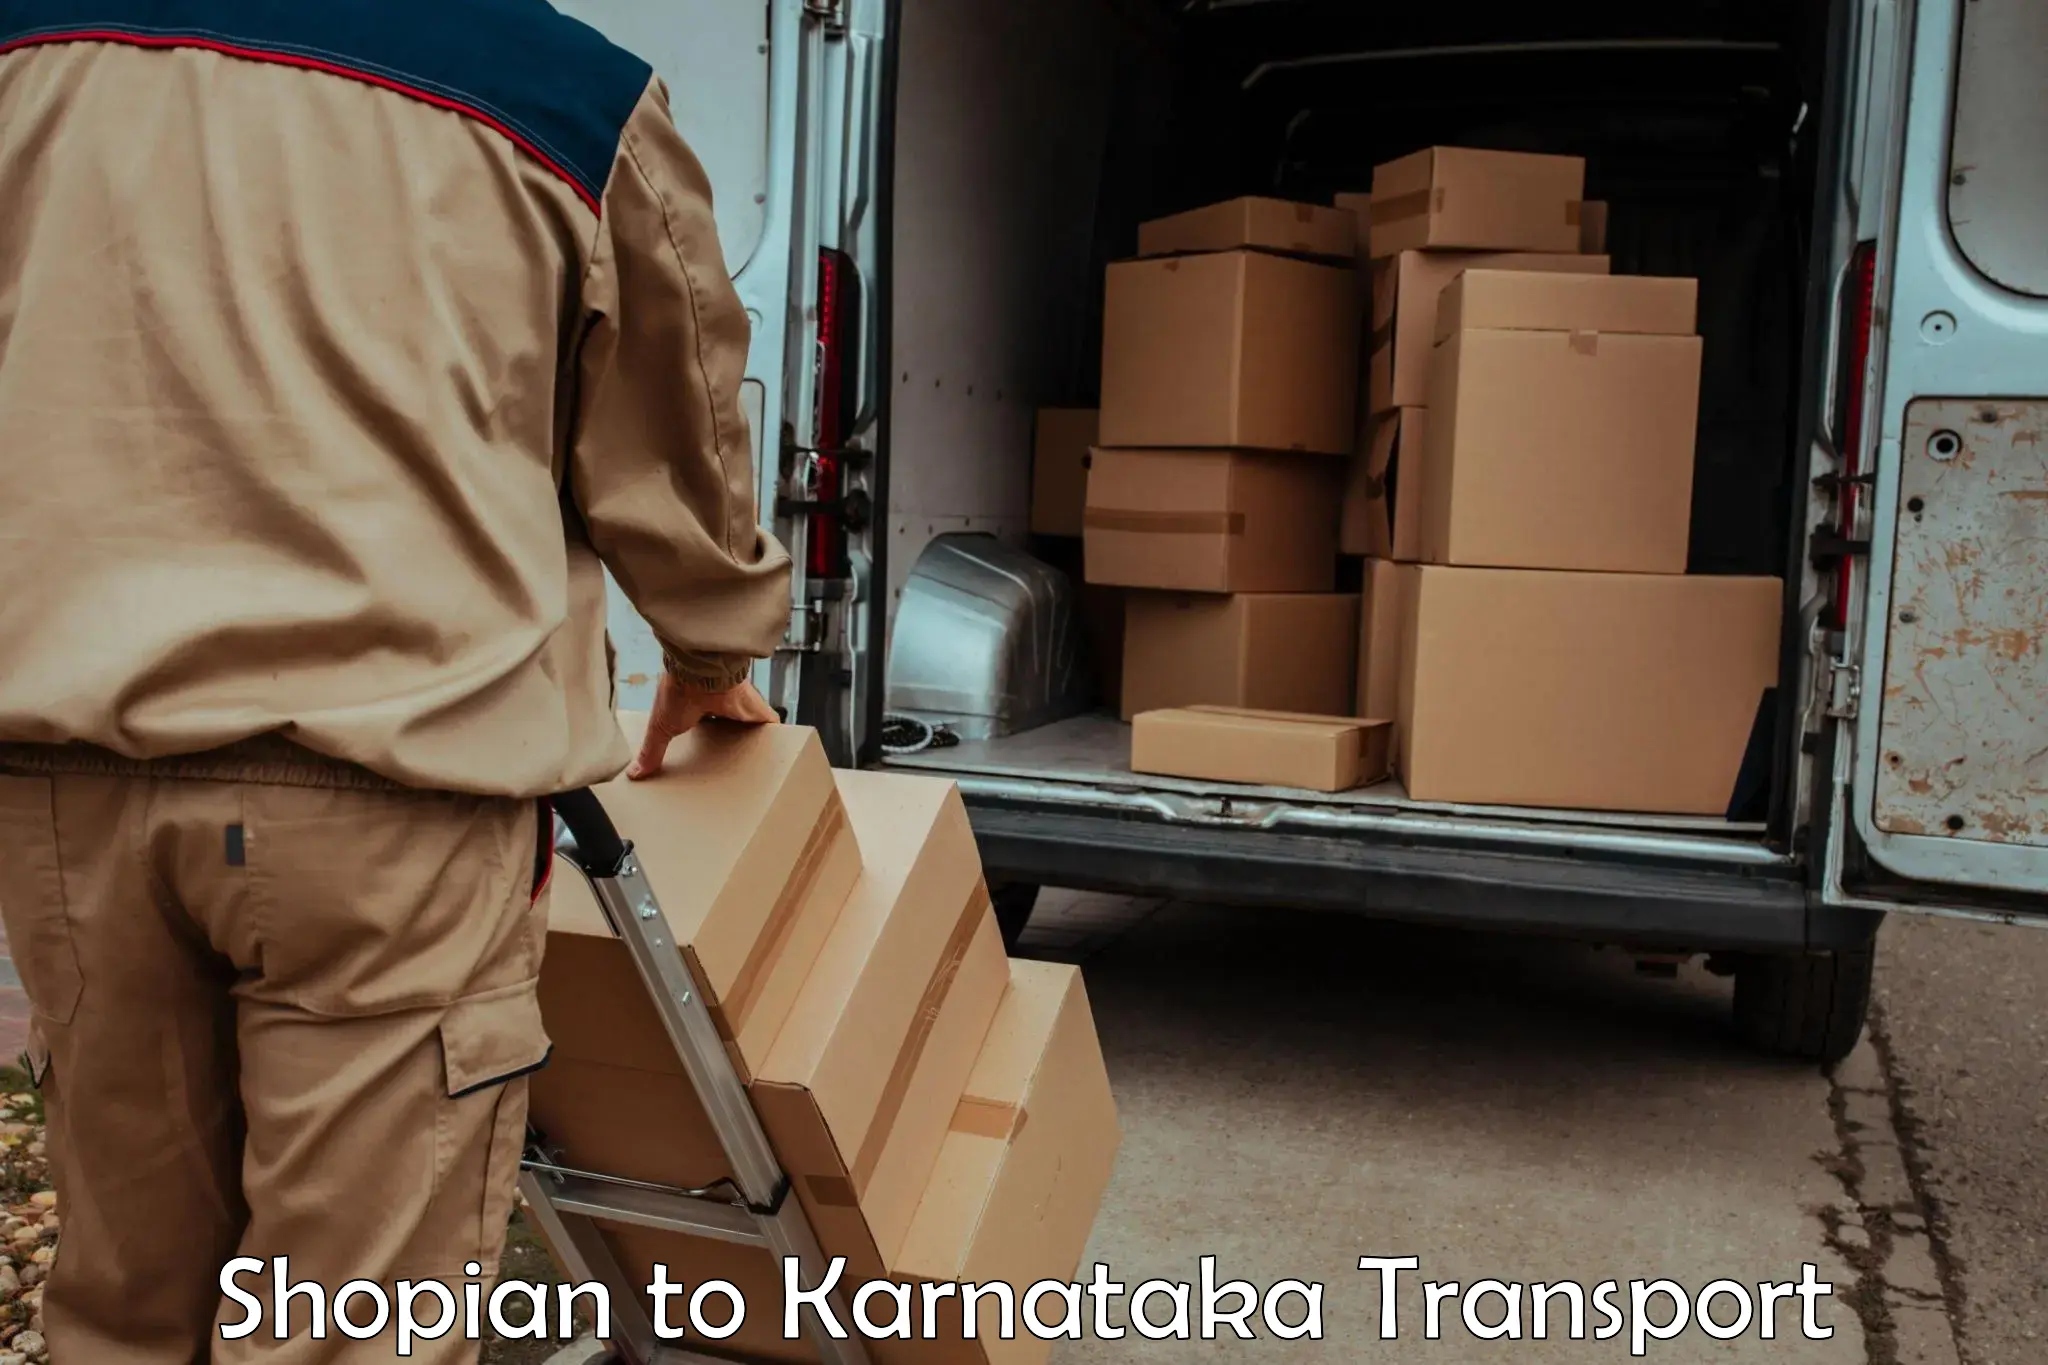 Online transport service Shopian to Kotturu